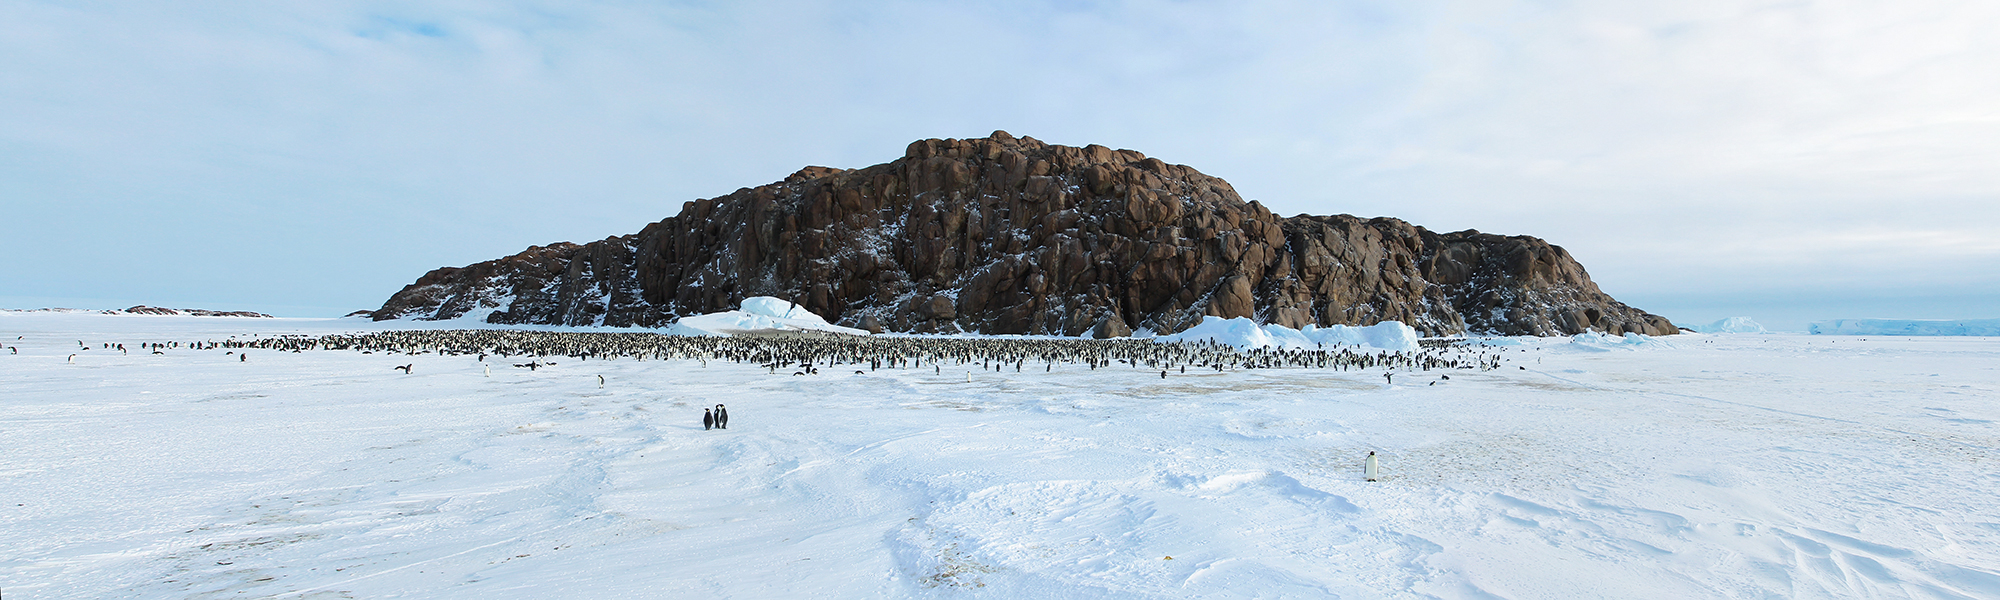 Observation animalière Antarctique © Sergey / Adobe Stock